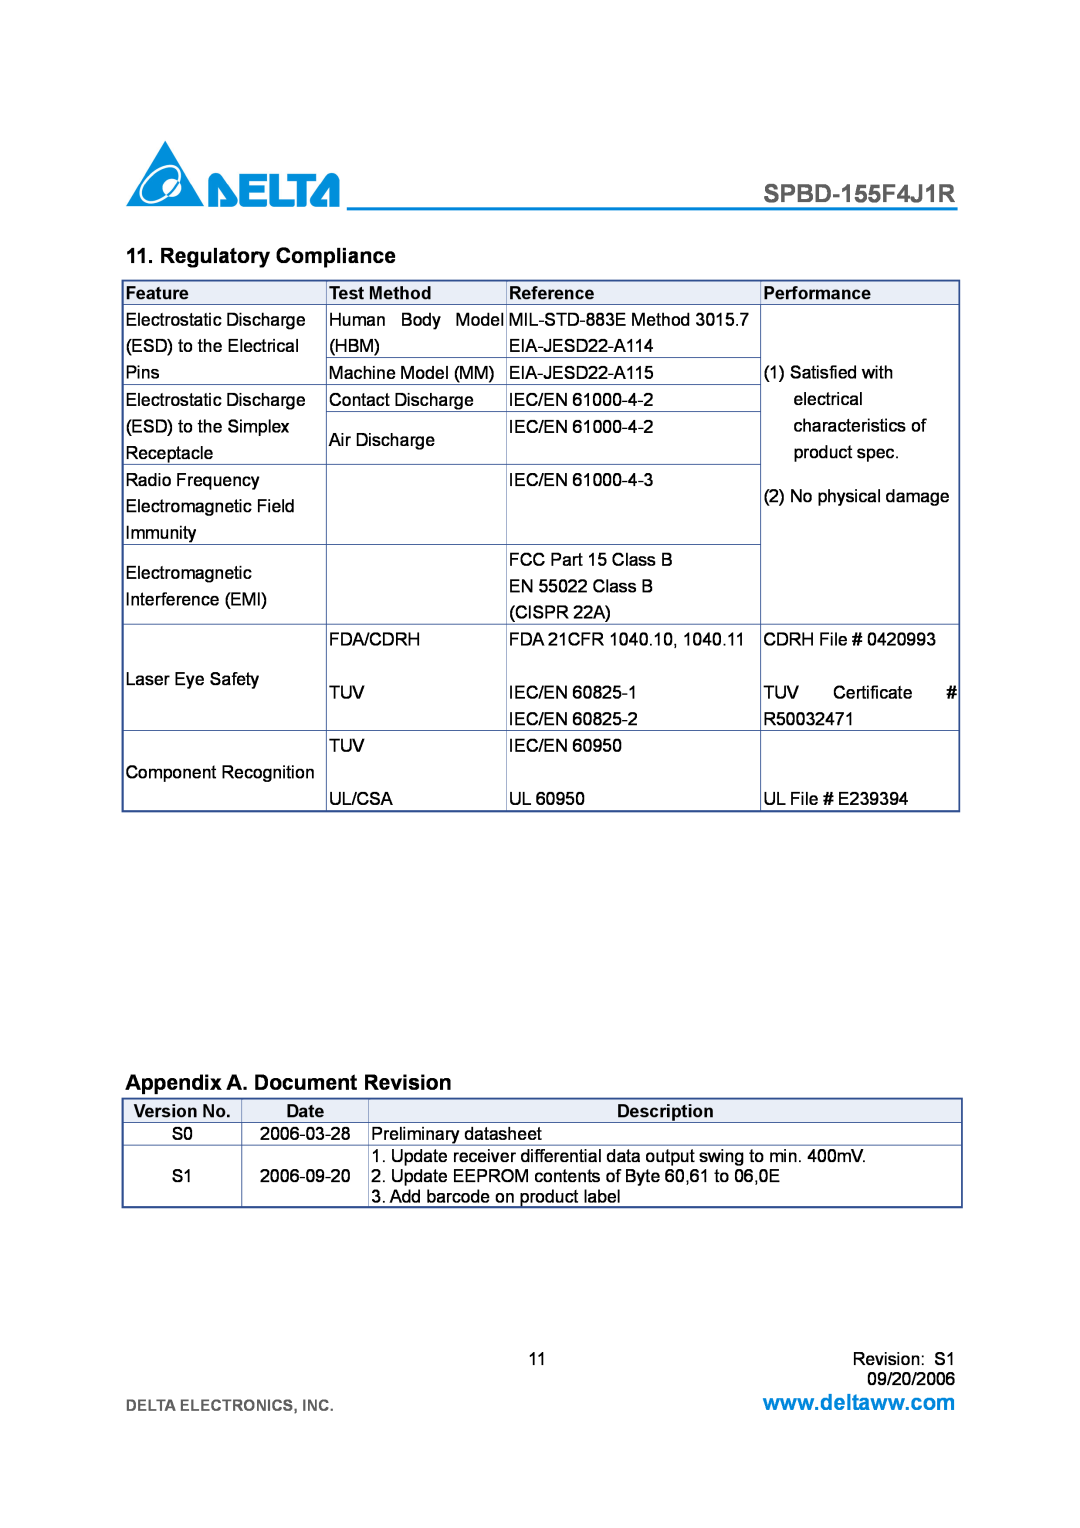 Delta Electronics SPBD-155F4J1R Regulatory Compliance, Appendix A. Document Revision, Feature, Test Method, Reference 